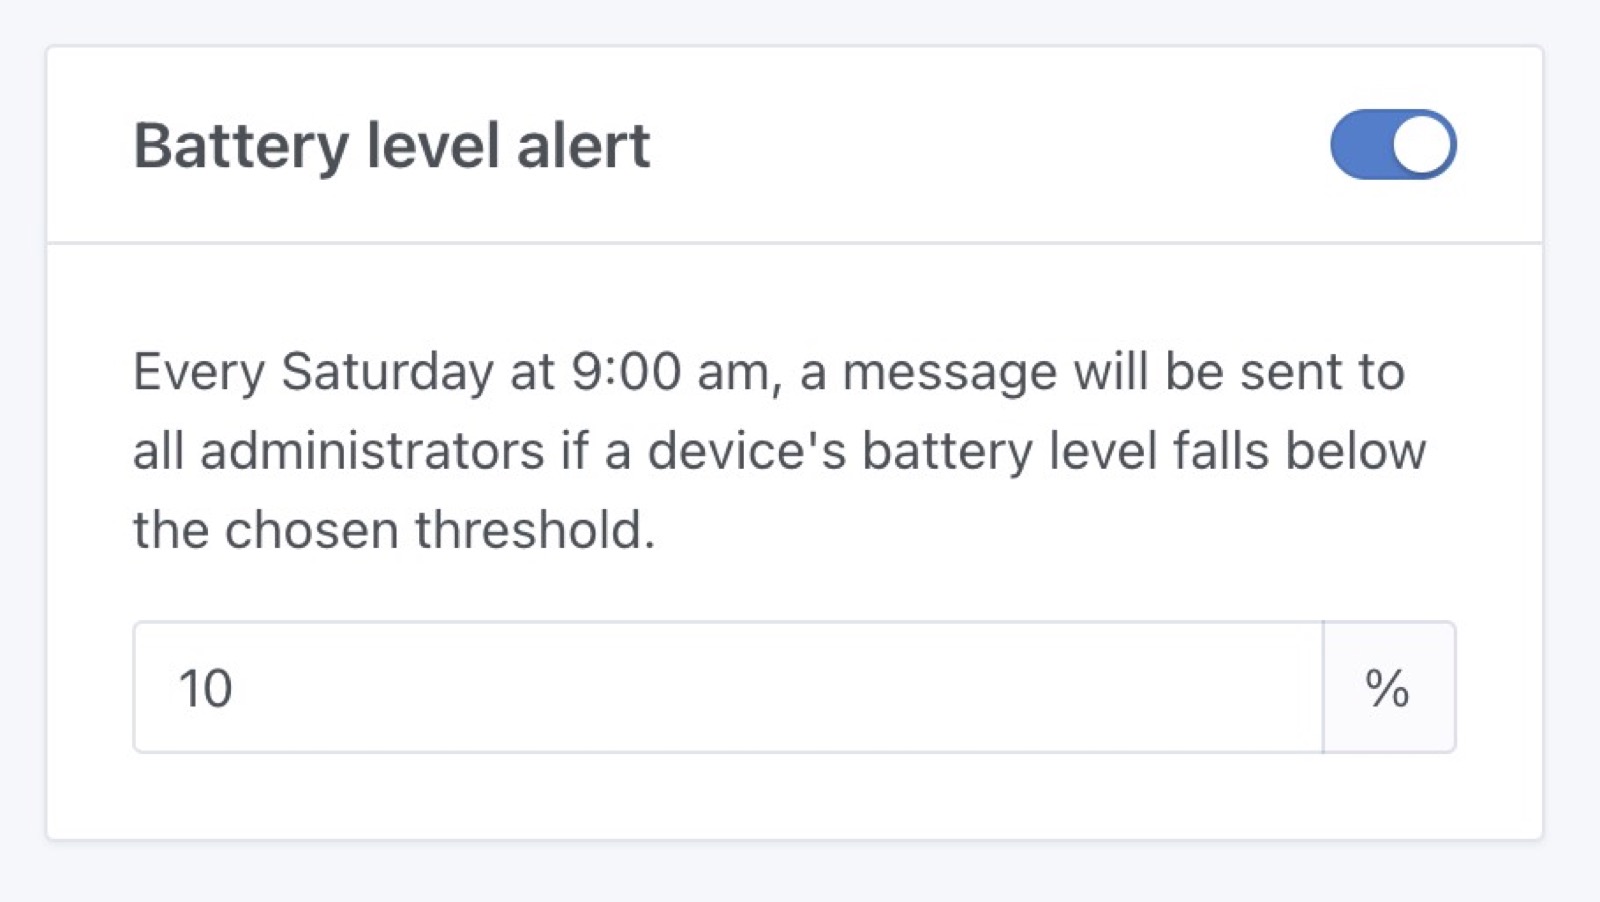 Battery alert